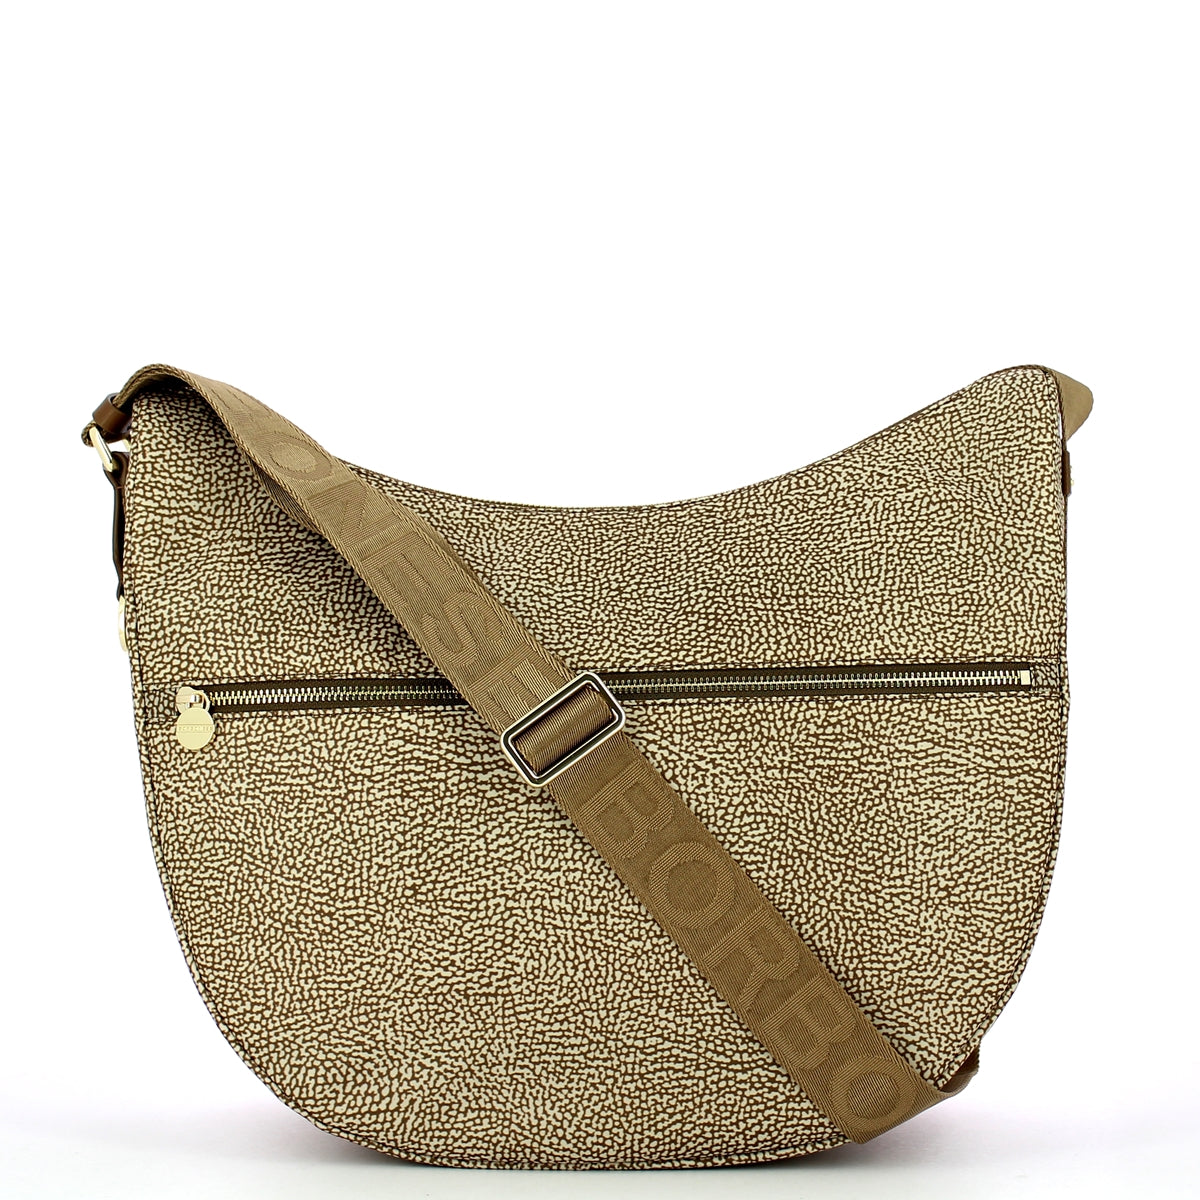 Borbonese - Luna Medium Beige Brown Bag with pocket made of Recycled Nylon - 934109I15 - BEIGE/MARRONE